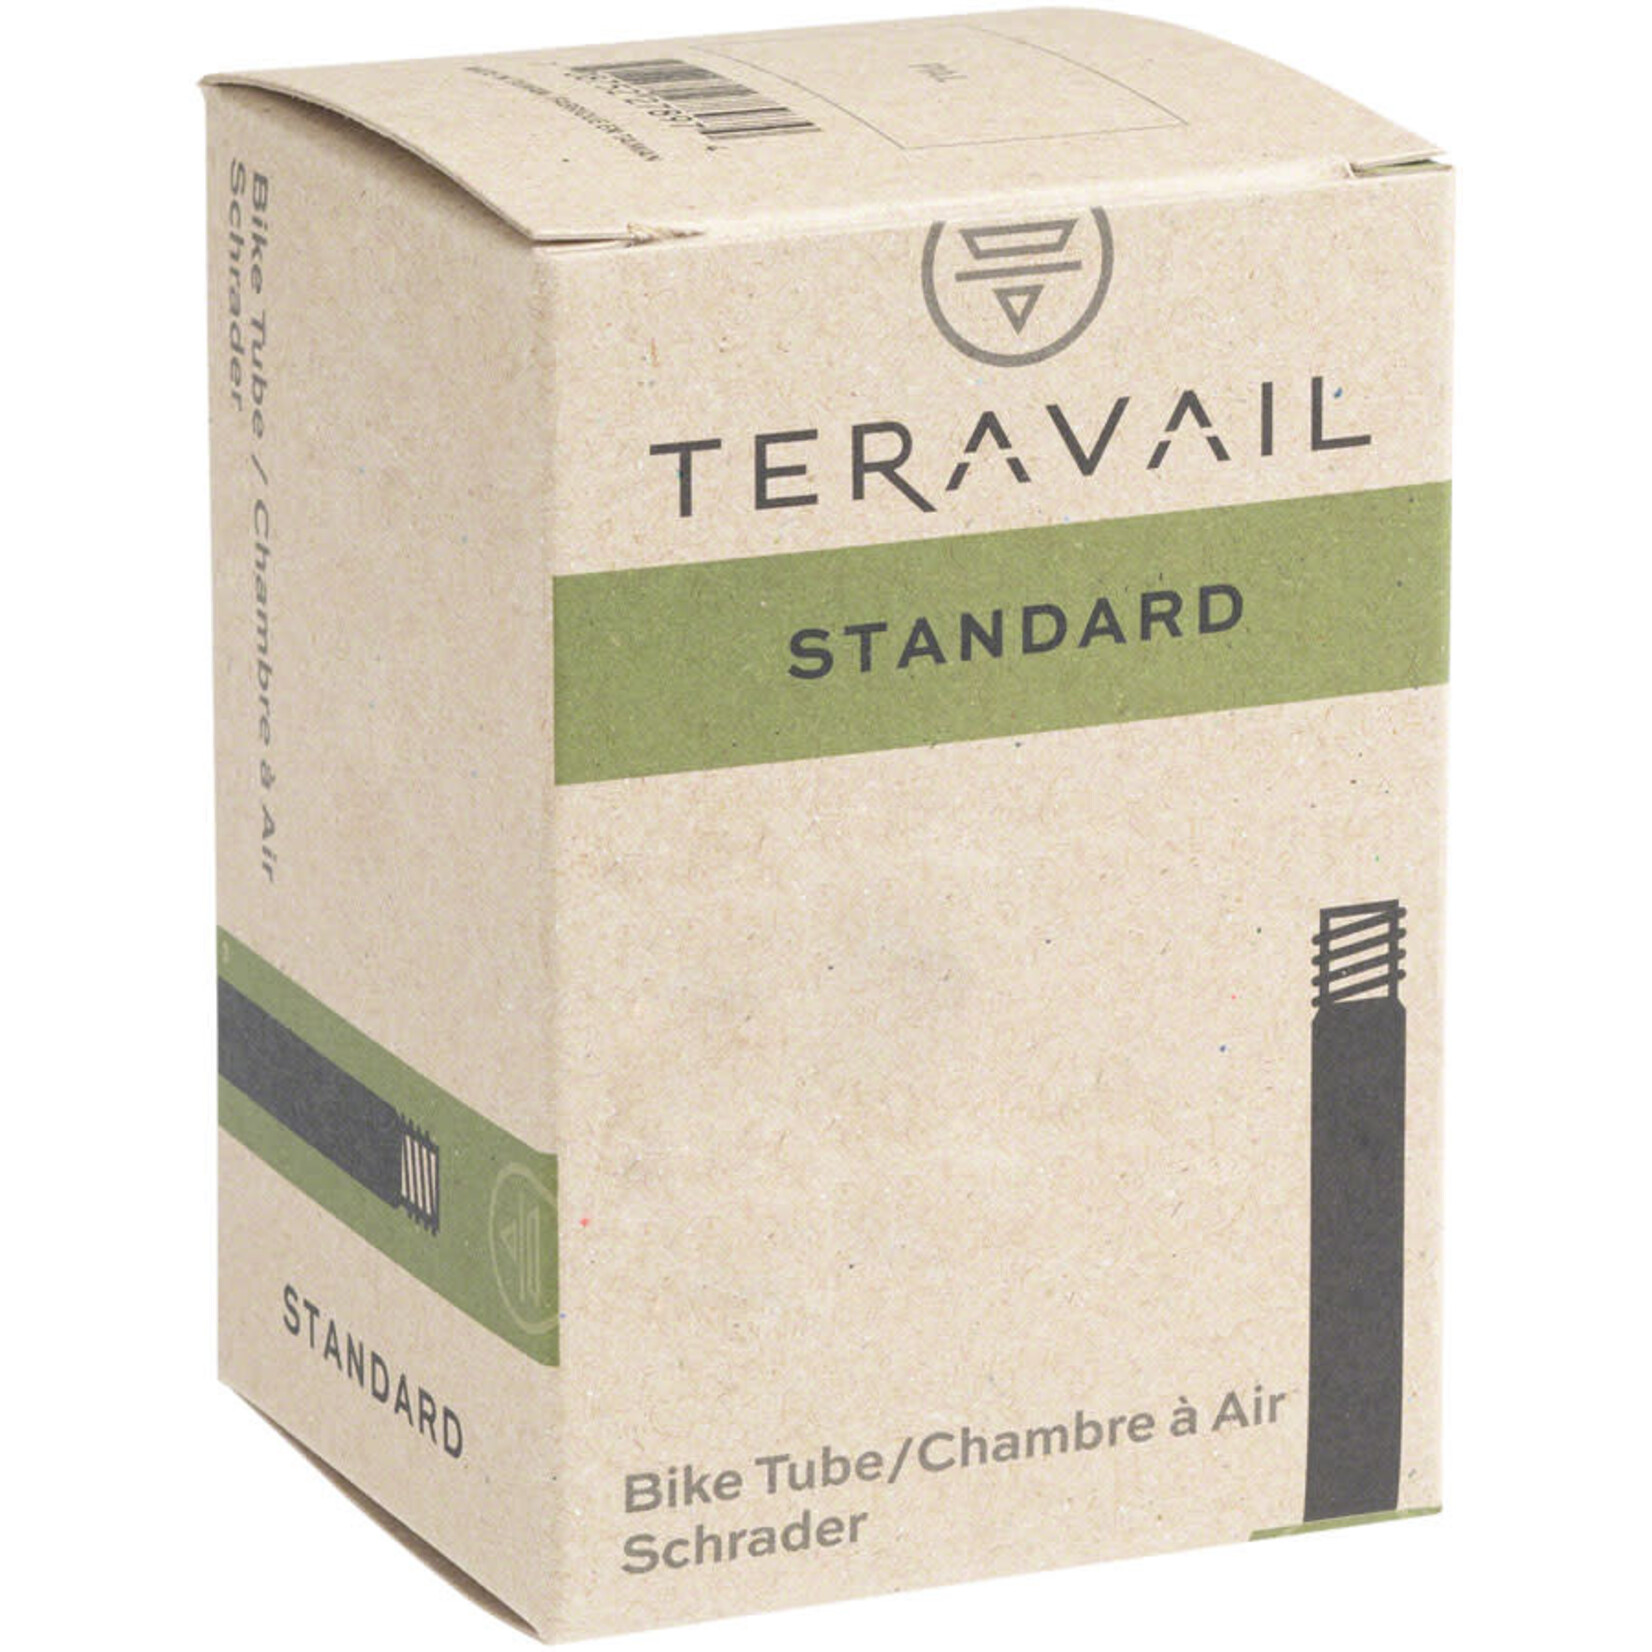 Teravail Teravail Standard Tube - 700 x 45 - 50mm, 35mm Schrader Valve